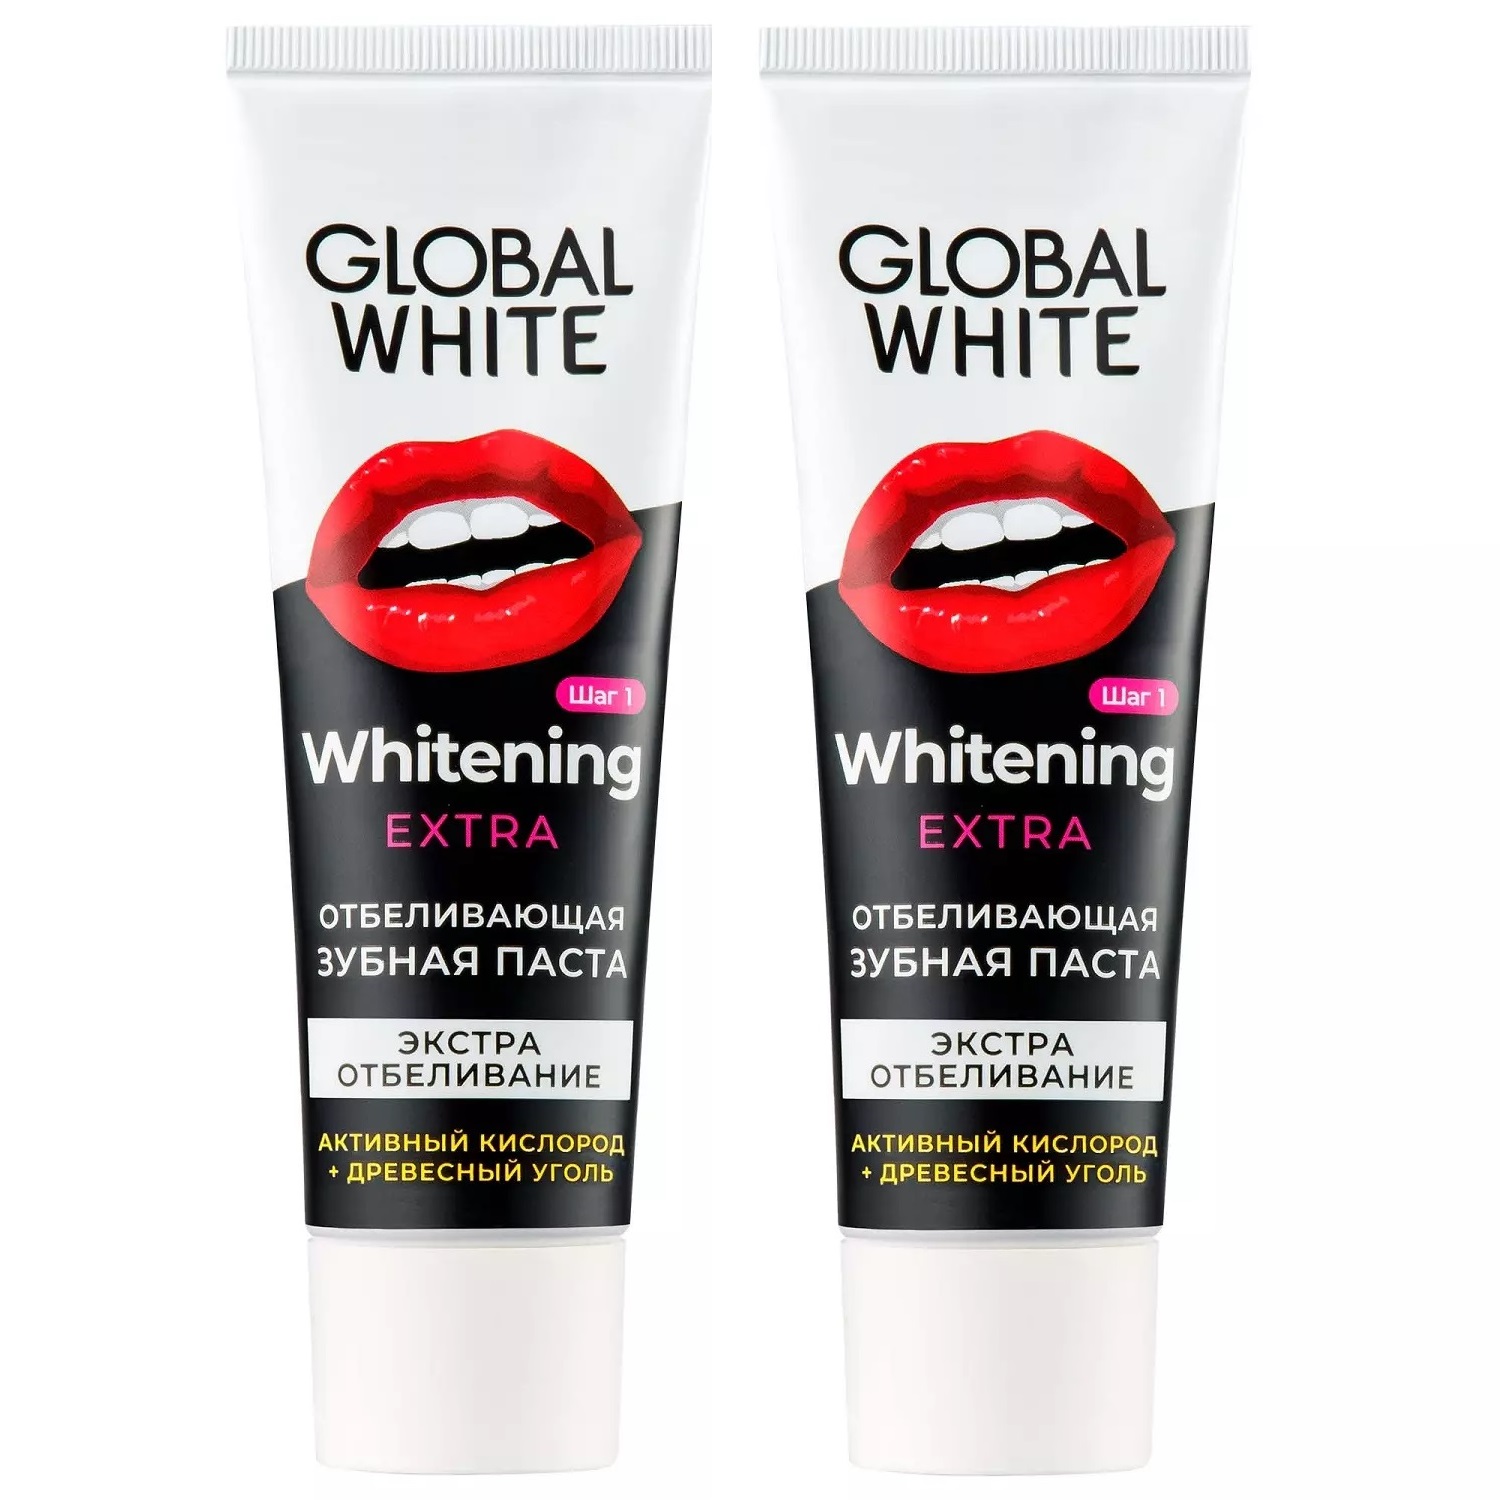 Global White Набор: отбеливающая зубная паста Extra Whitening, 2 х 30 мл (Global White, Подготовка к отбеливанию) отбеливающая зубная паста с активированным углем 100 мл dr organic